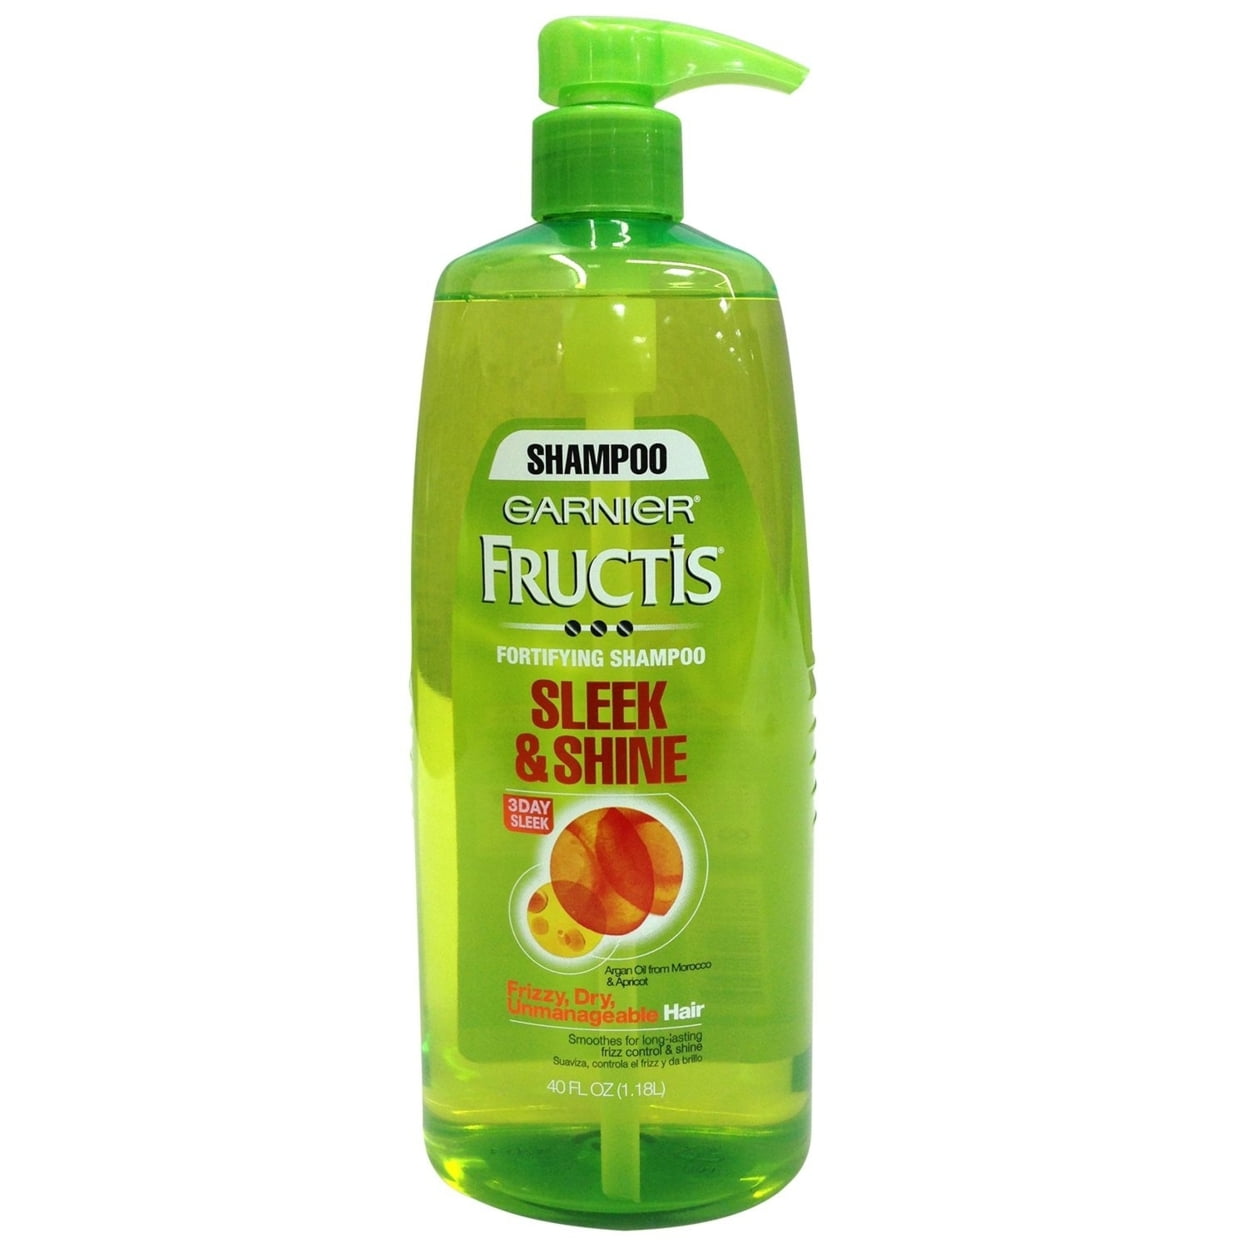 visueel Aap verdediging Garnier Fructis Shampoo - Pump - 40 Ounce - Walmart.com